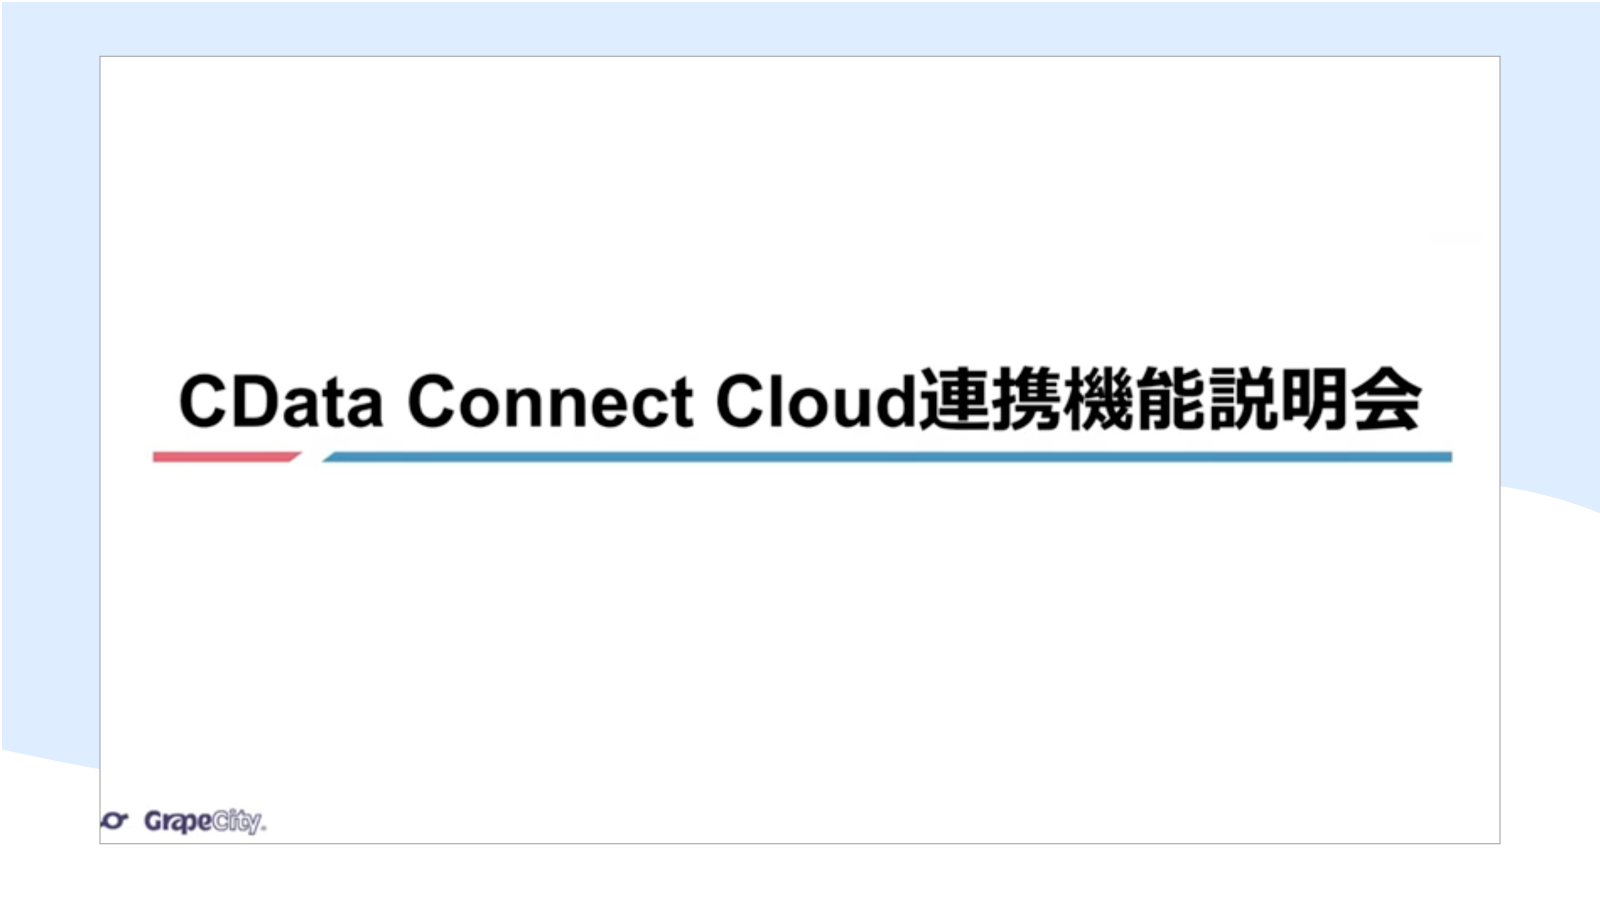 krewData「CData Connect Cloud連携機能」説明会